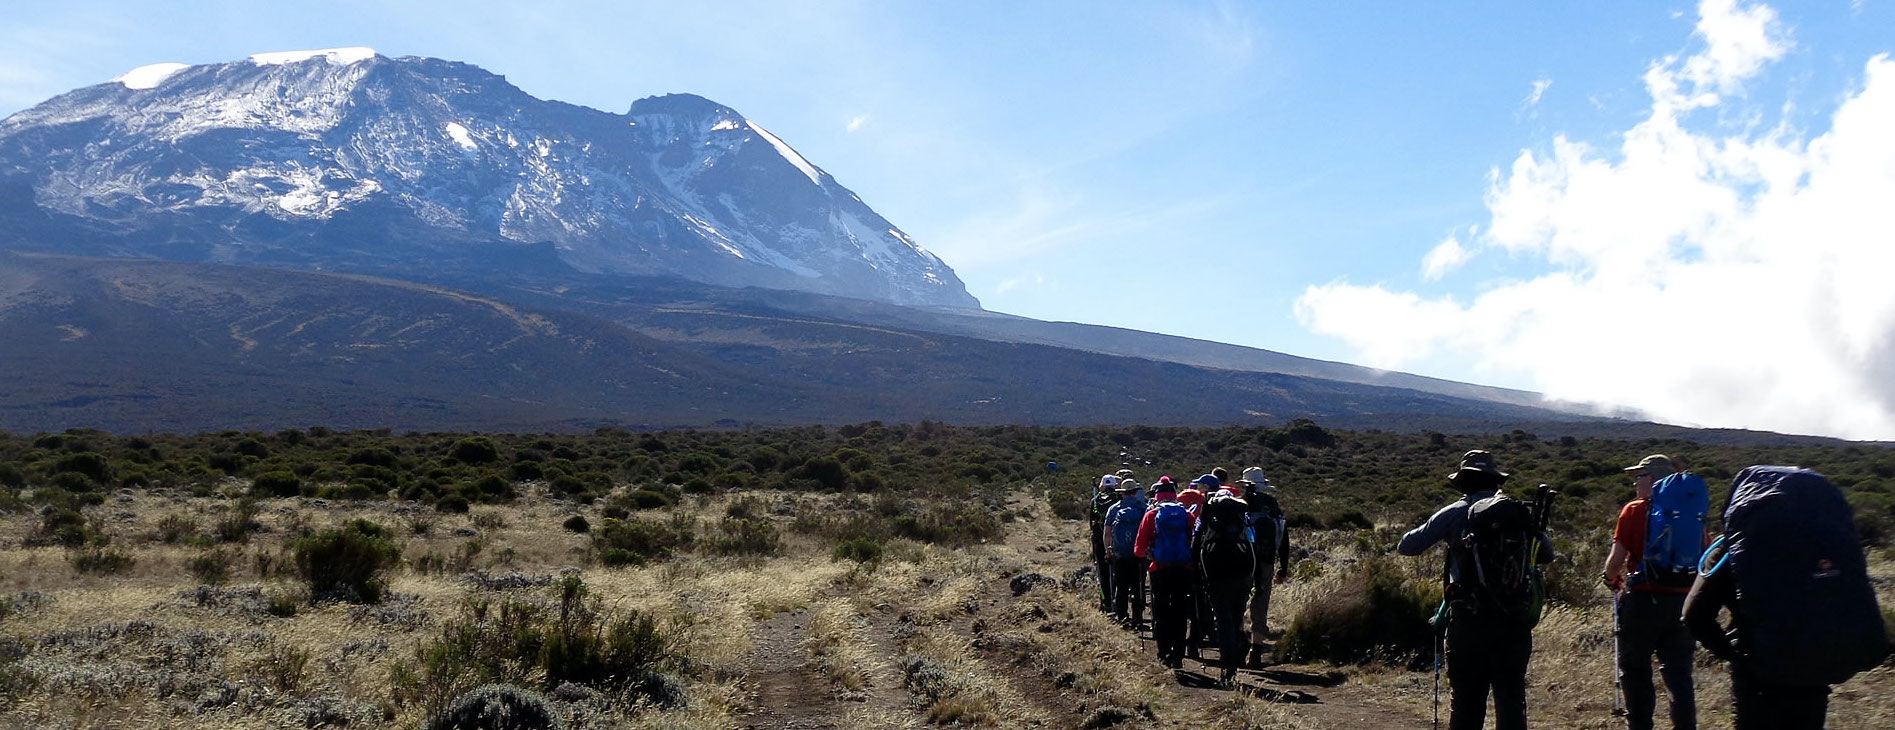 Kilimanjaro Routes – The Trails up Uhuru Peak